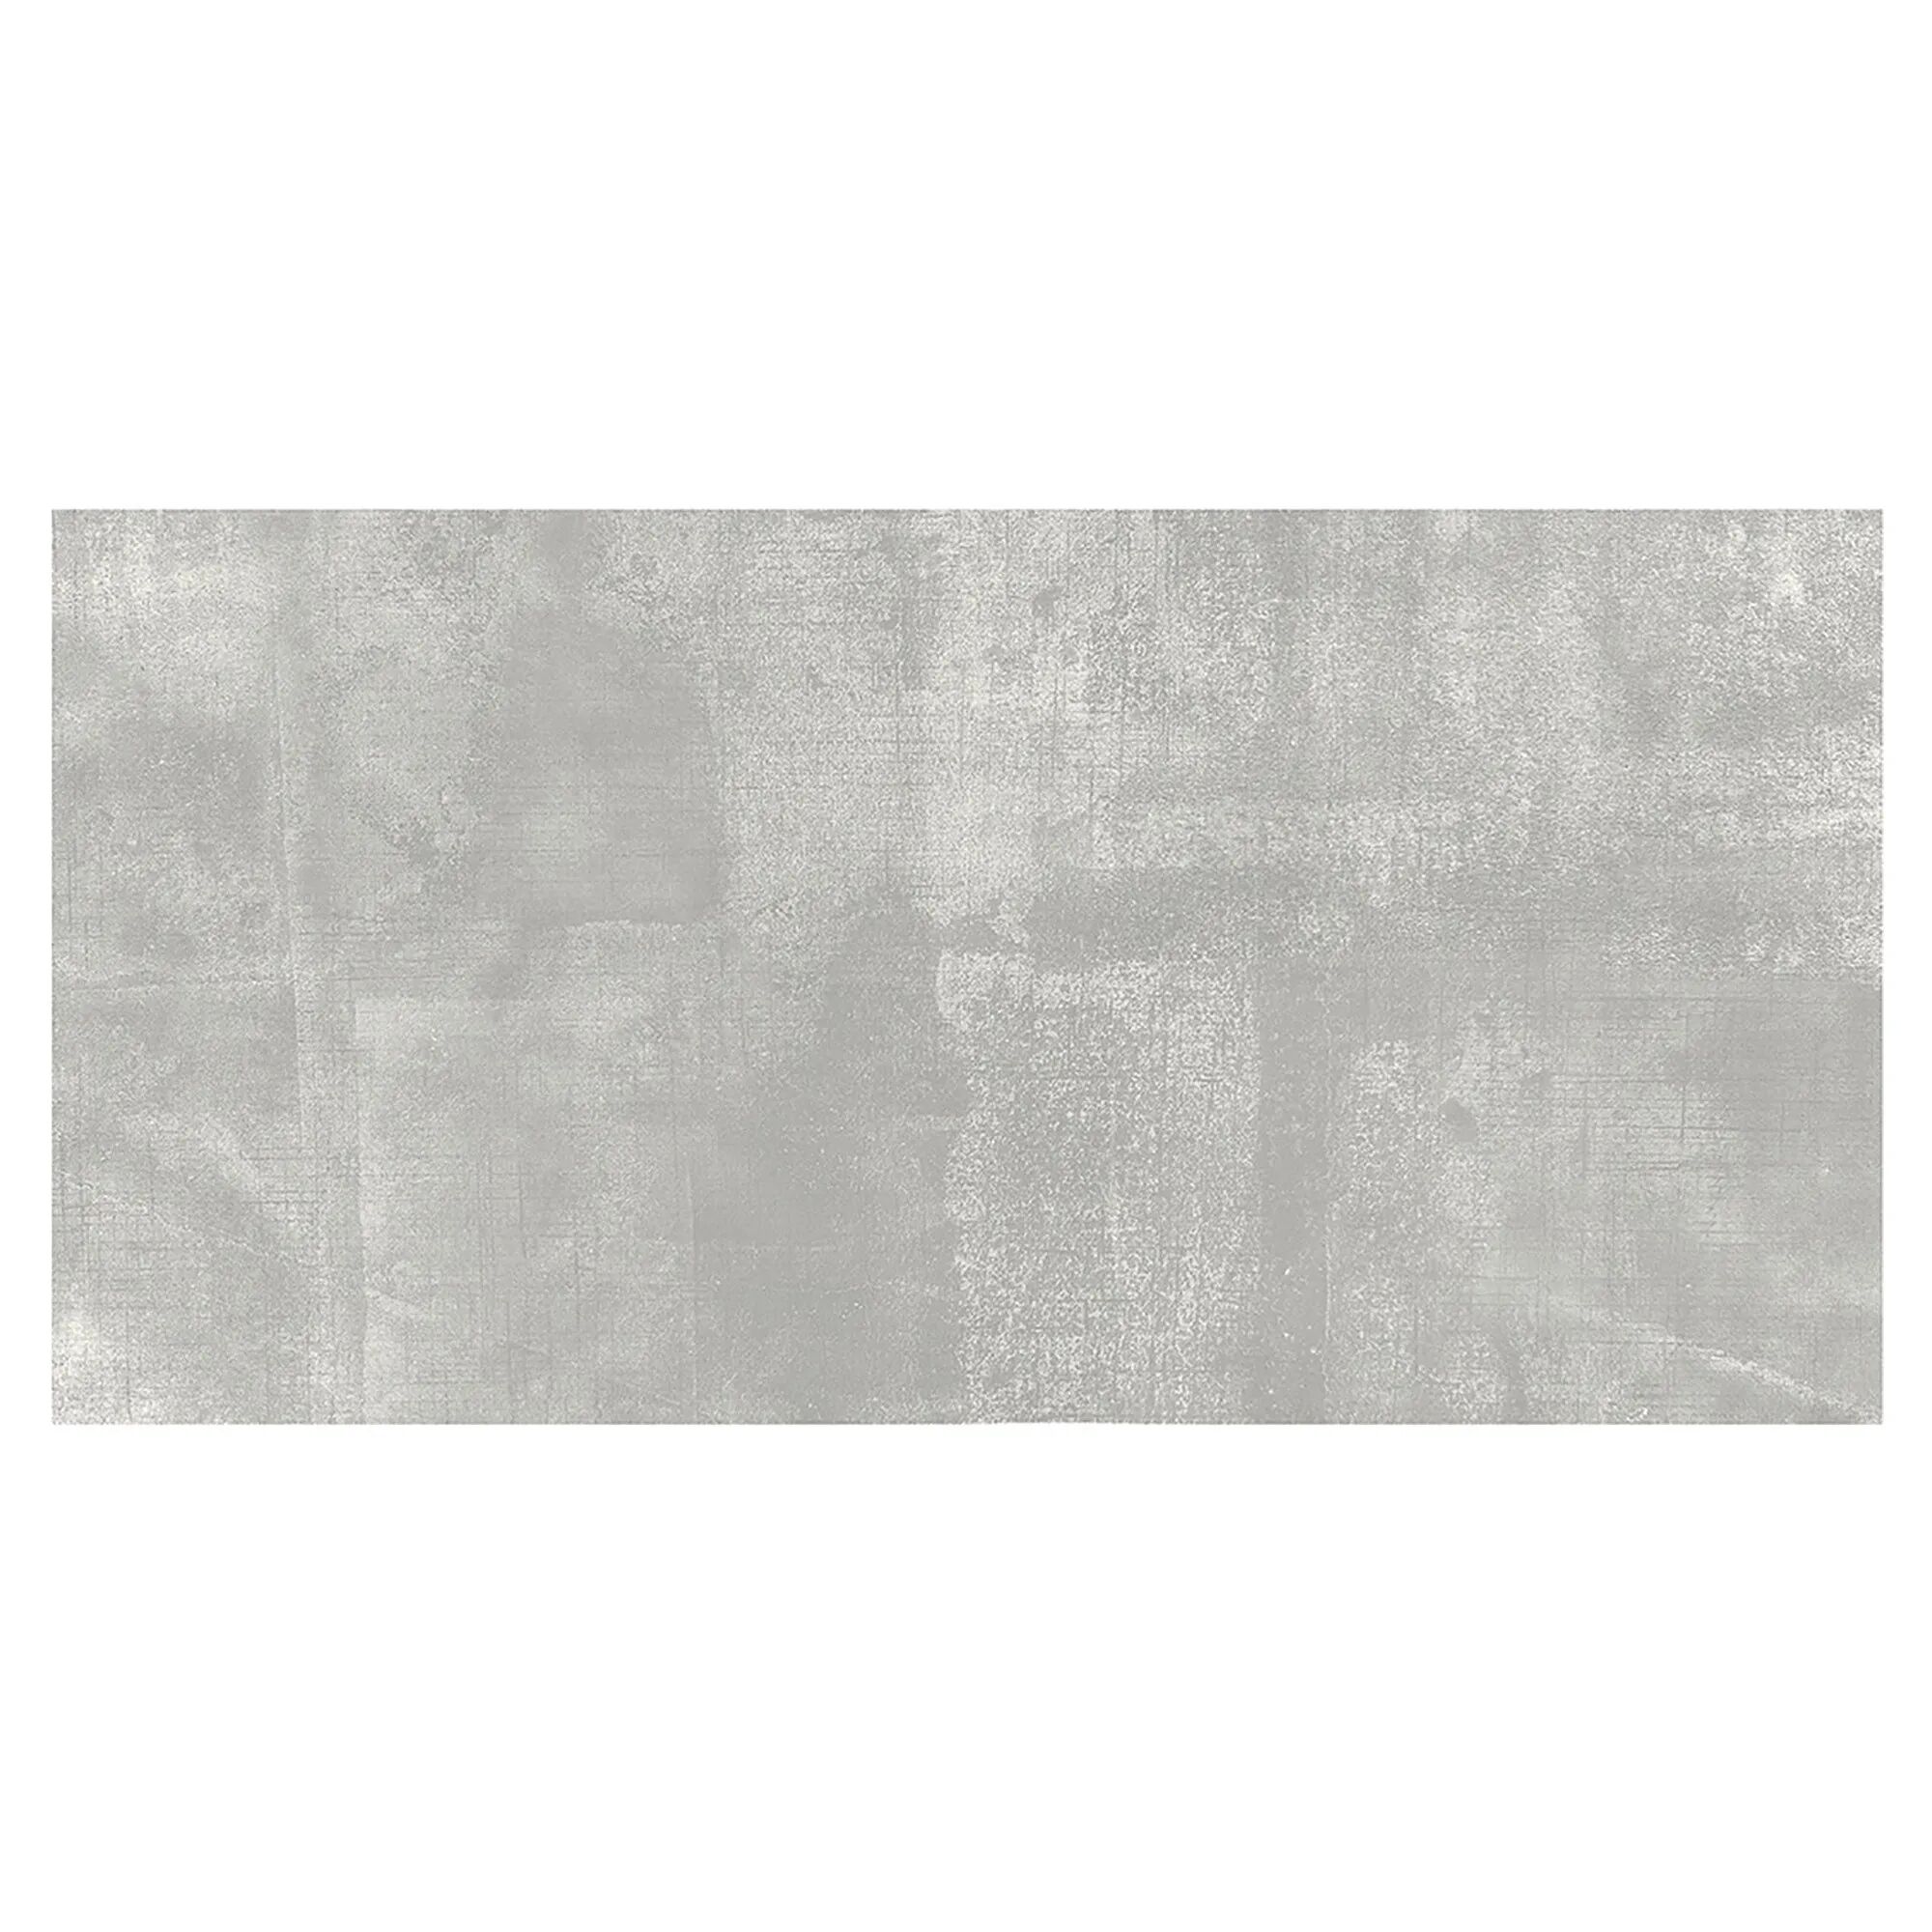 ECODADO Pavimento Fabric Grey Rettificato 60x120 Cm Liscia Pei 4 R9 Gres Porcellanato